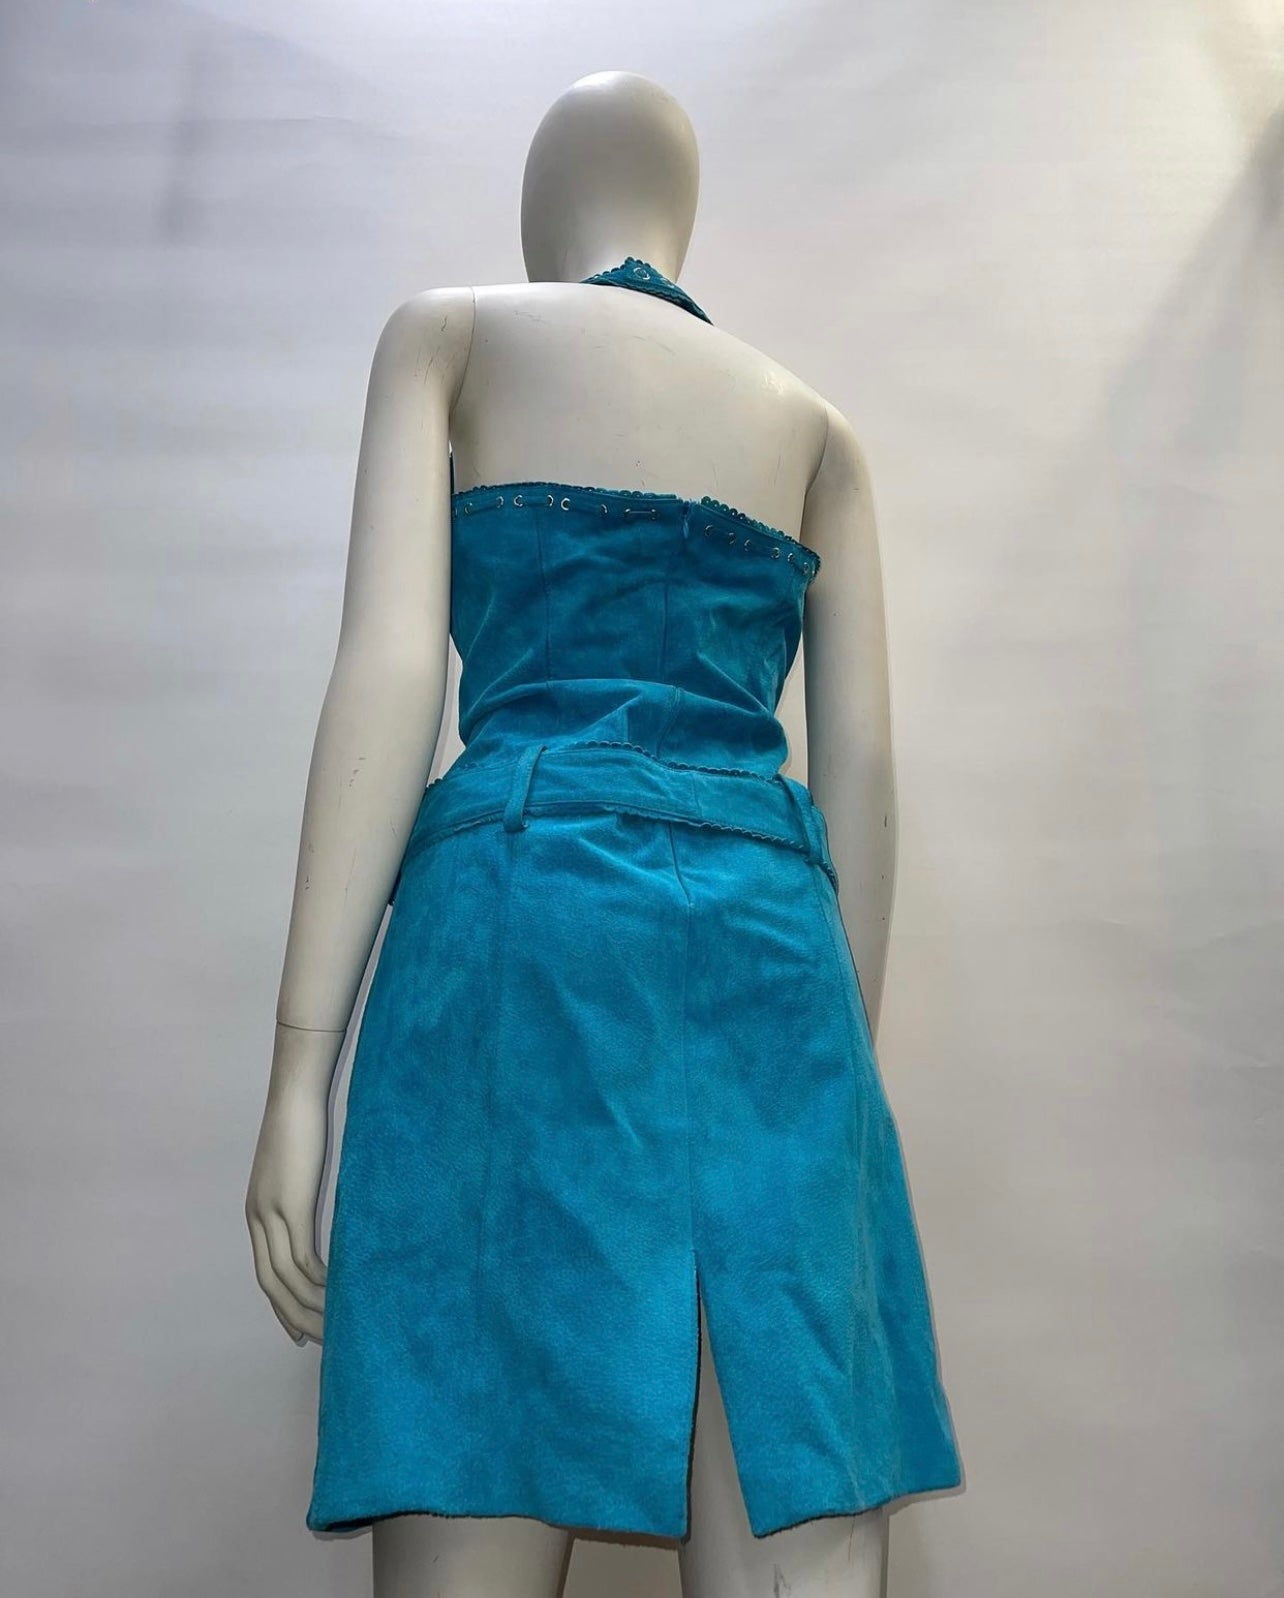 Vintage Teal Suede Leather Mini Dress(Sz 8)